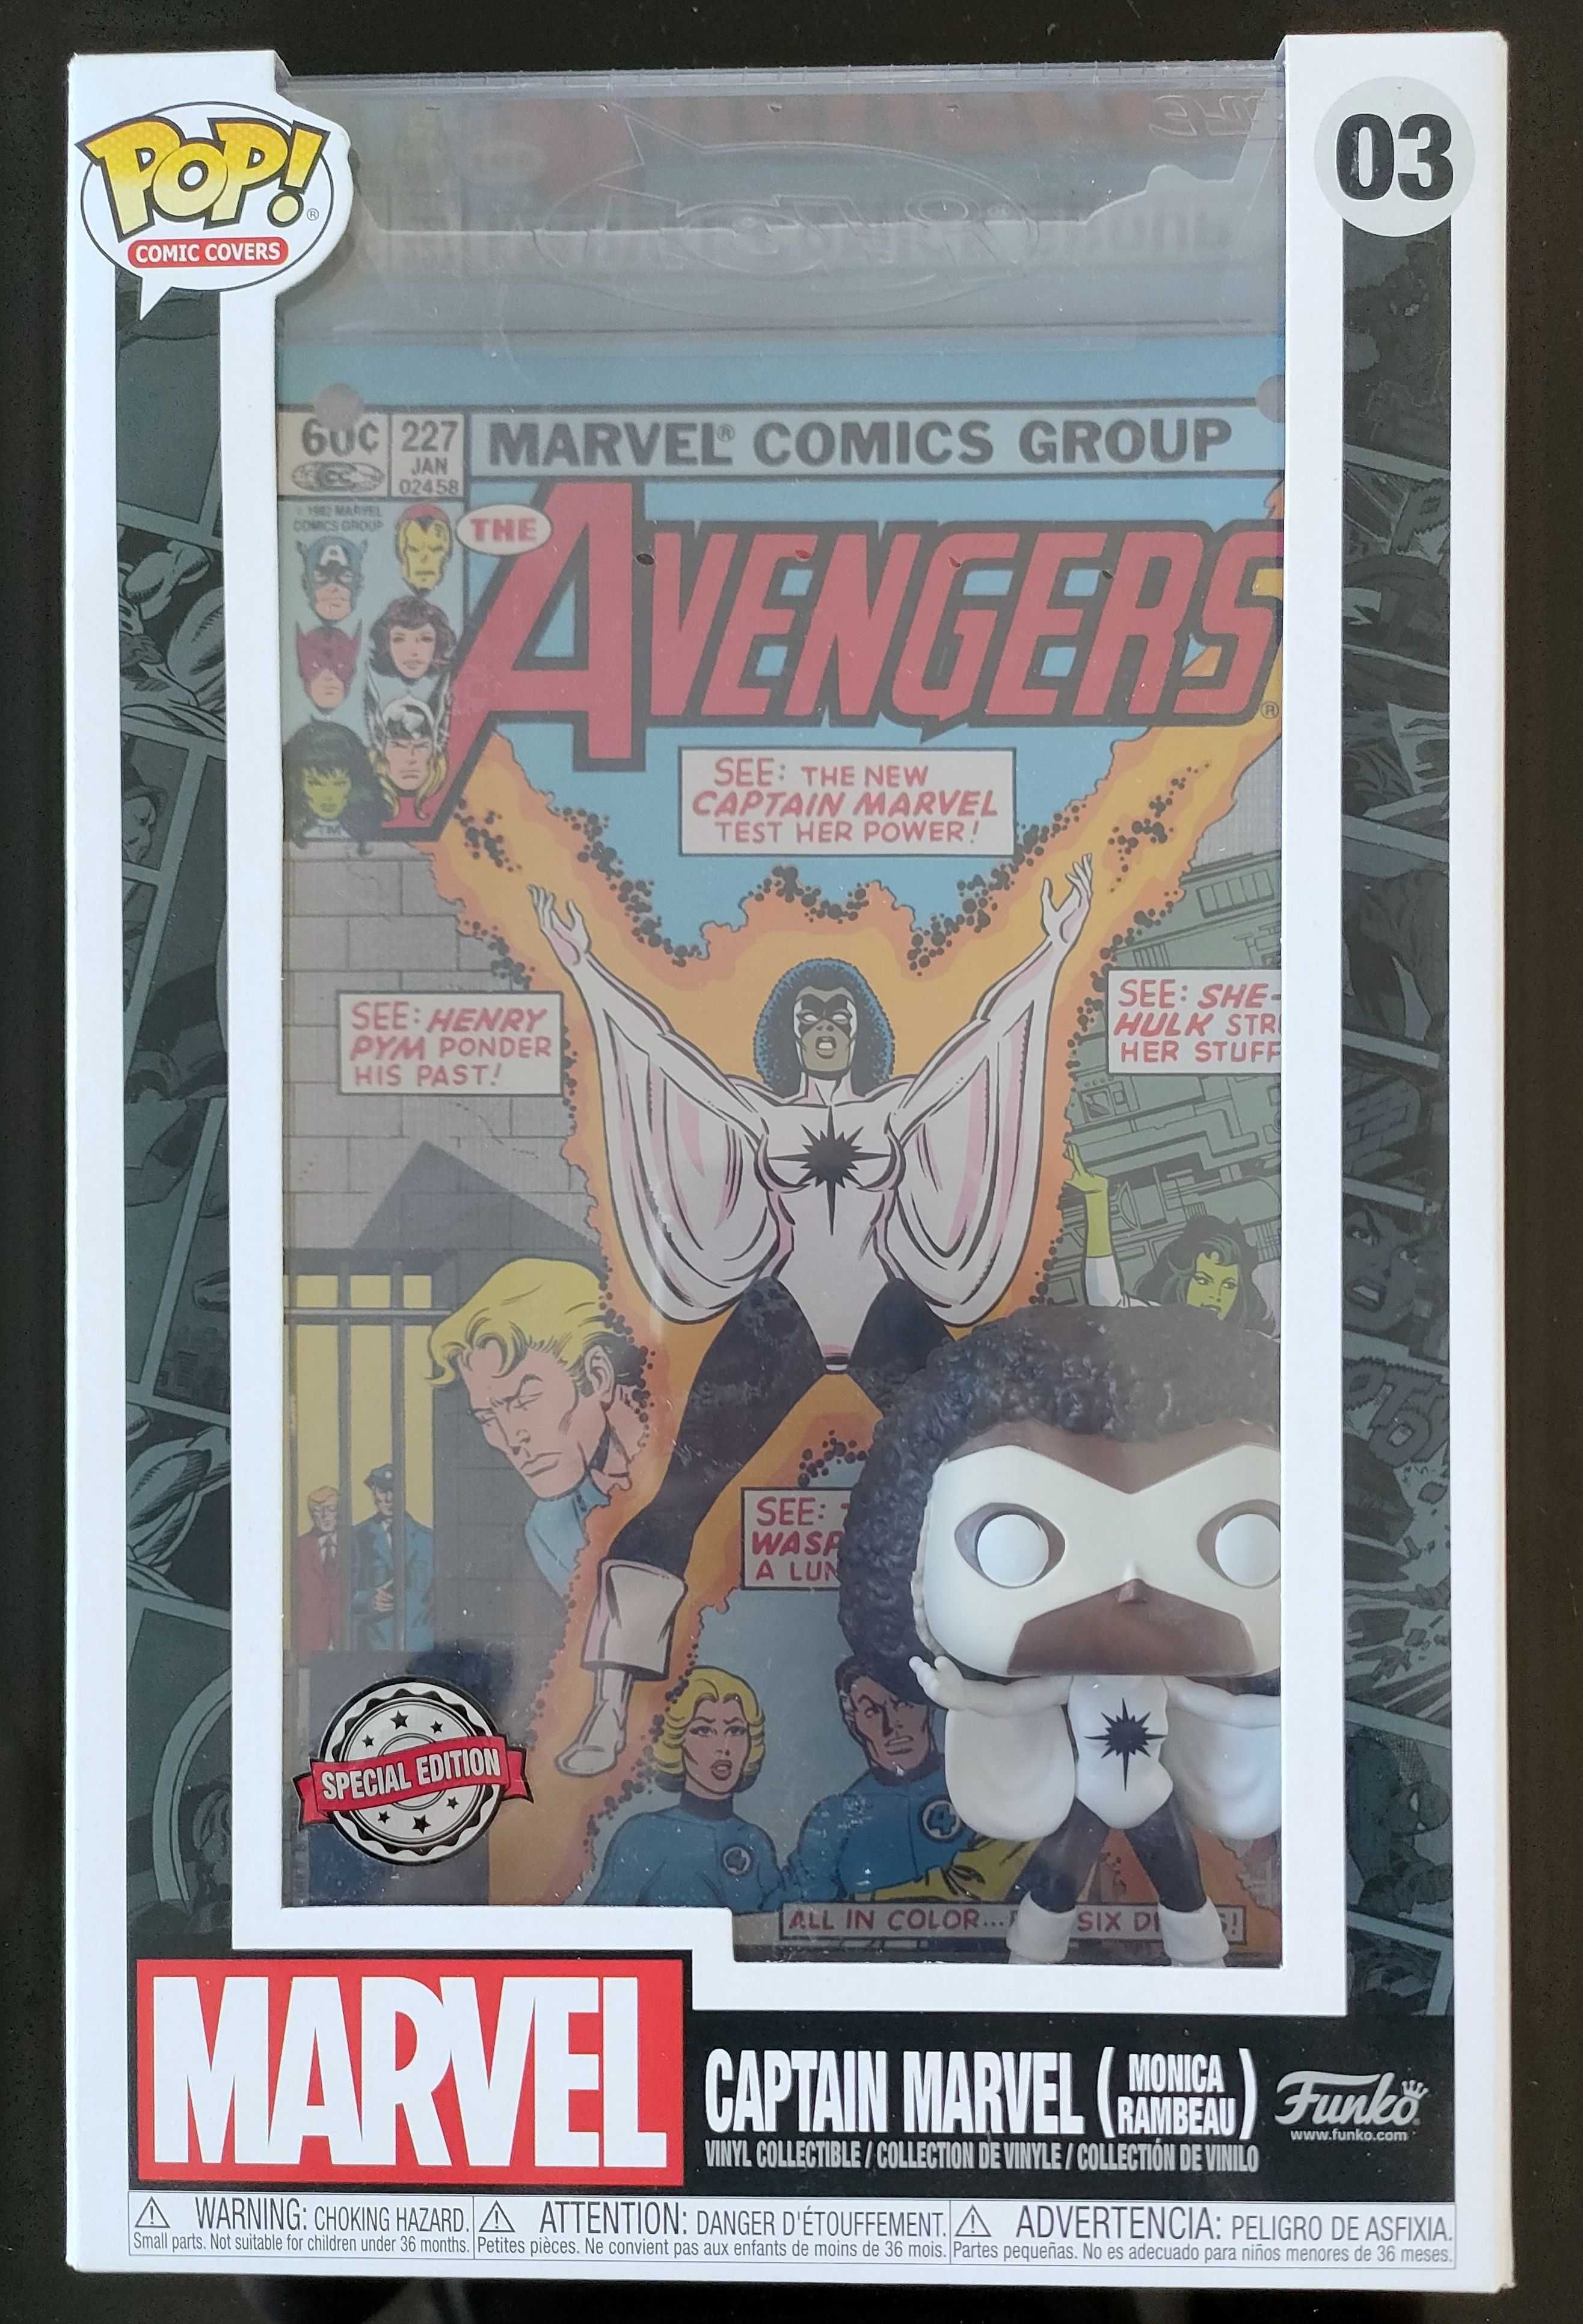 Figurka Funko Pop - Captain Marvel (Monica Rambeau) - Comic Covers #03